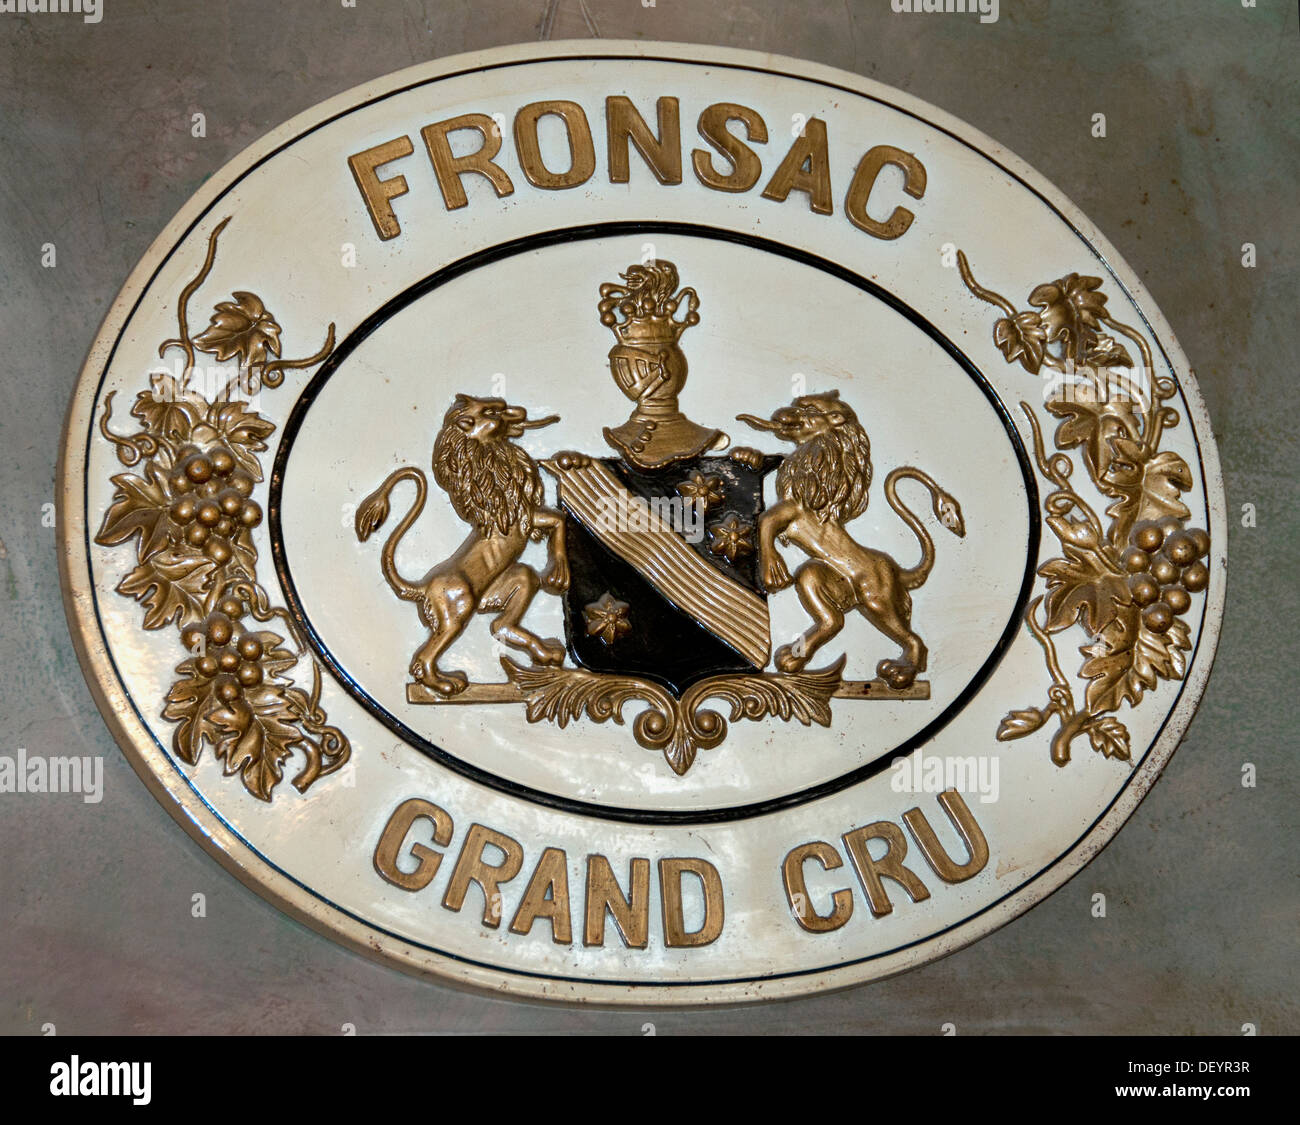 Fronsac Grand Cru signer producteur France Vin de France Banque D'Images